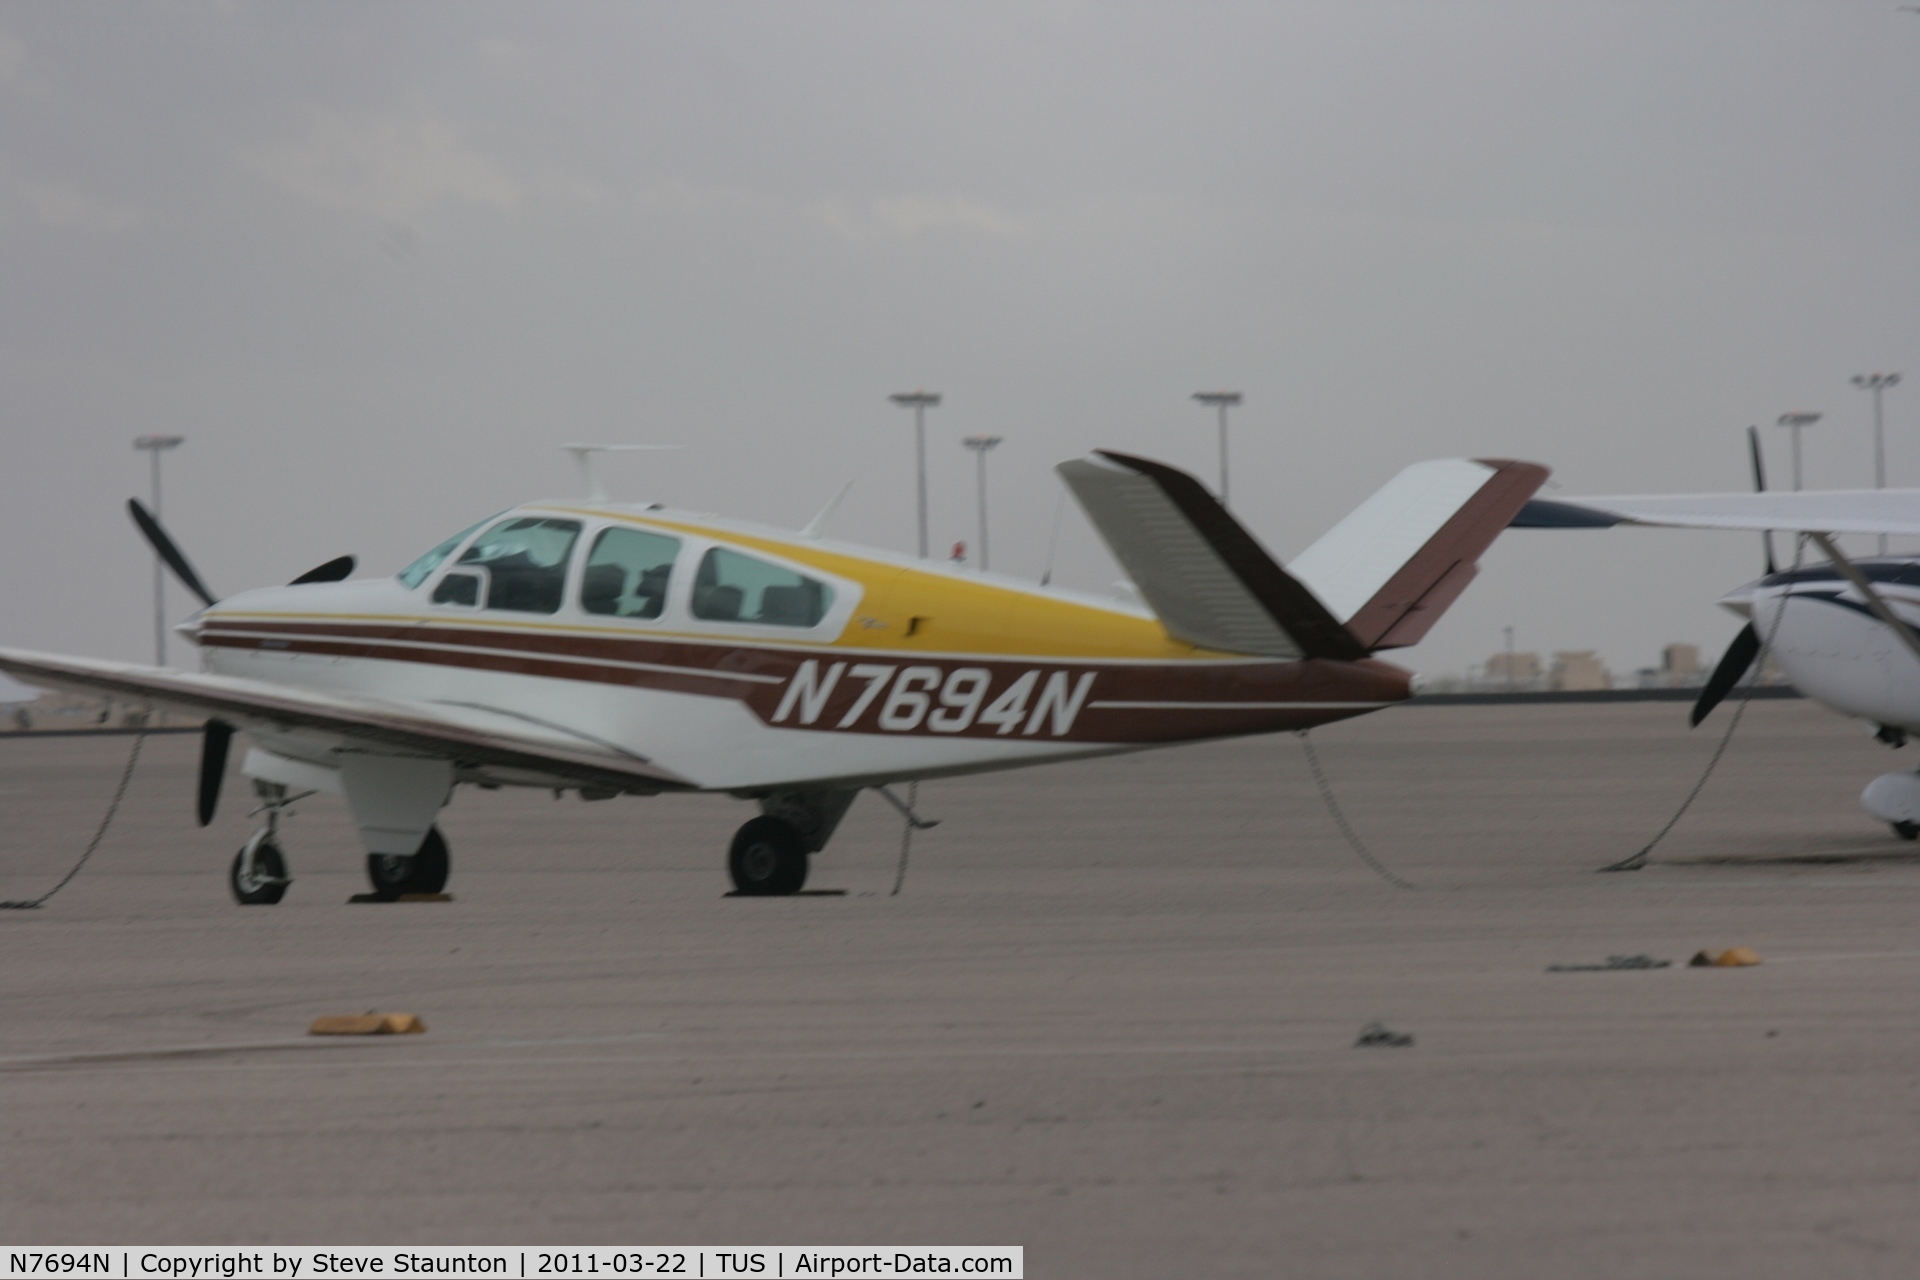 N7694N, 1968 Beech V35A Bonanza C/N D-8869, Taken at Tucson Airport, in March 2011 whilst on an Aeroprint Aviation tour